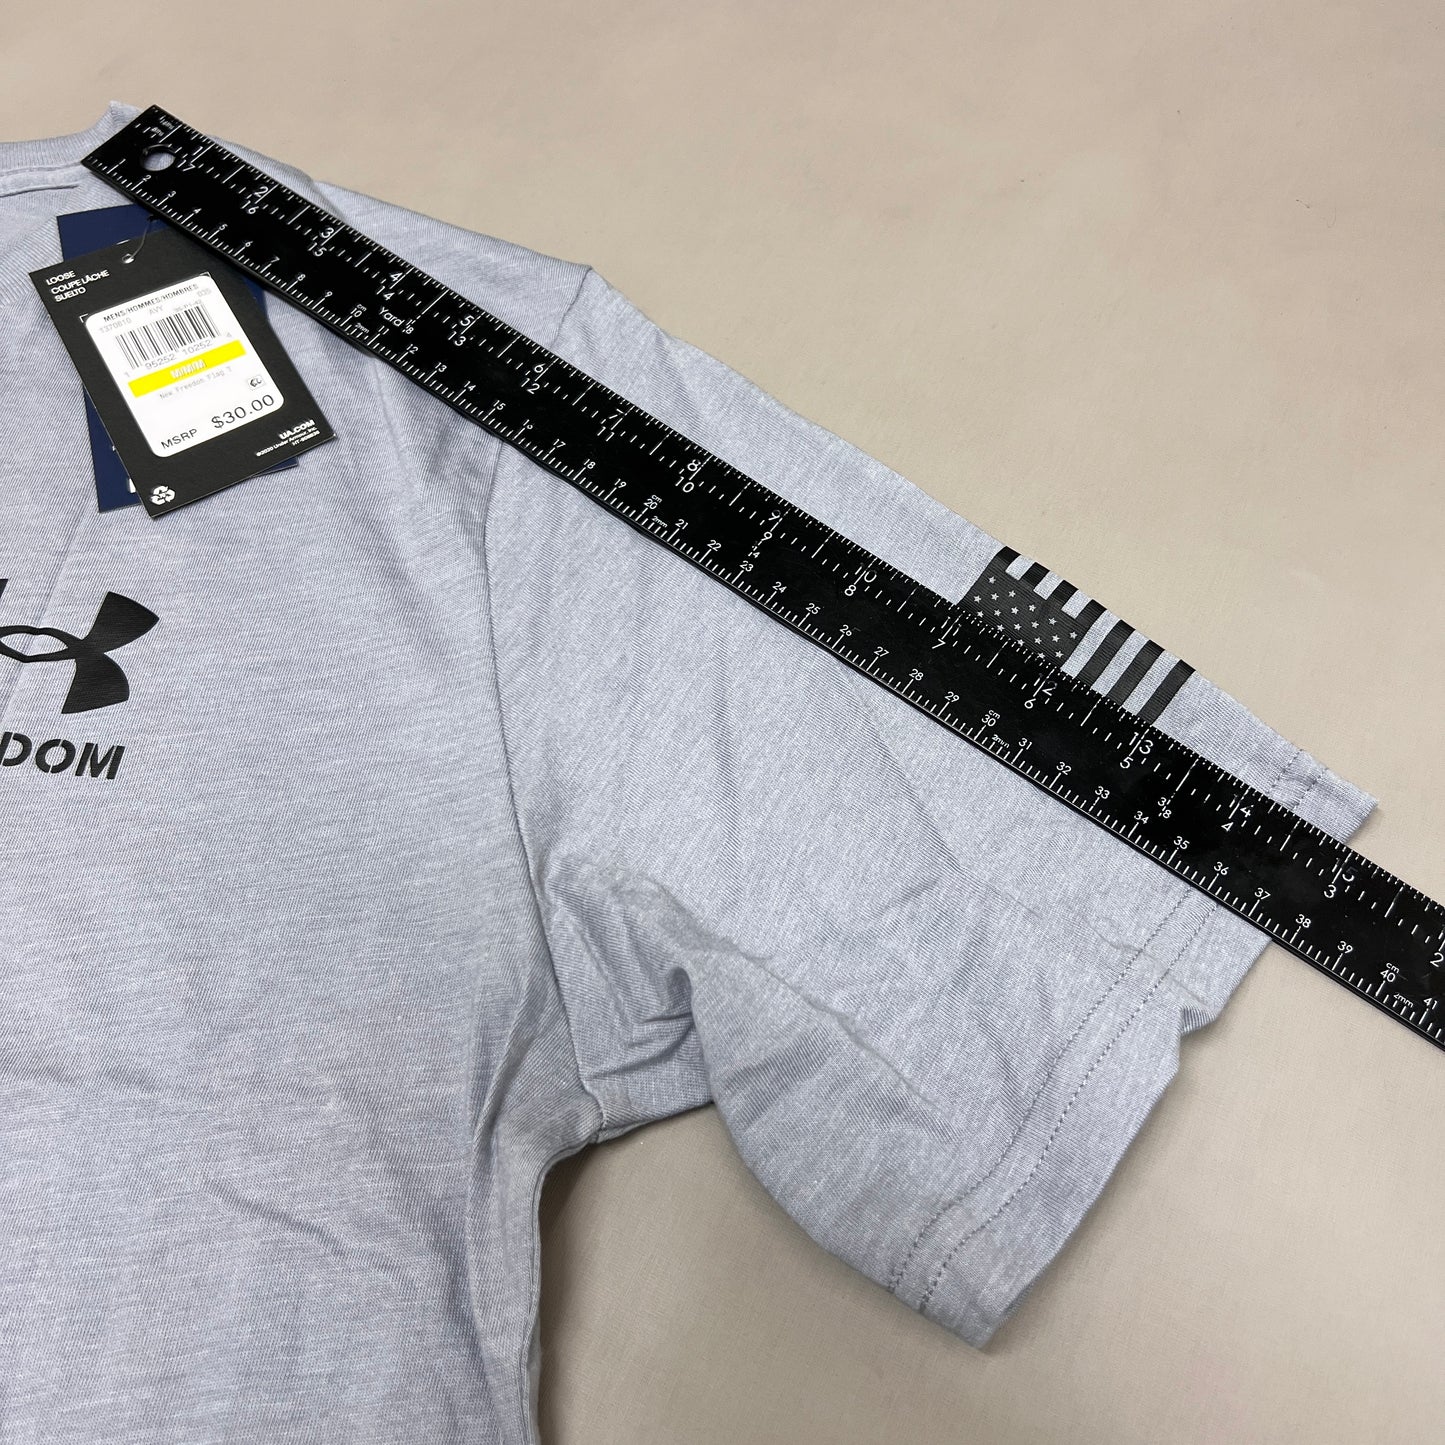 UNDER ARMOUR Freedom Flag T-Shirt Men's Steel Medium Heather / Black-035 Sz M 1370810 (New)